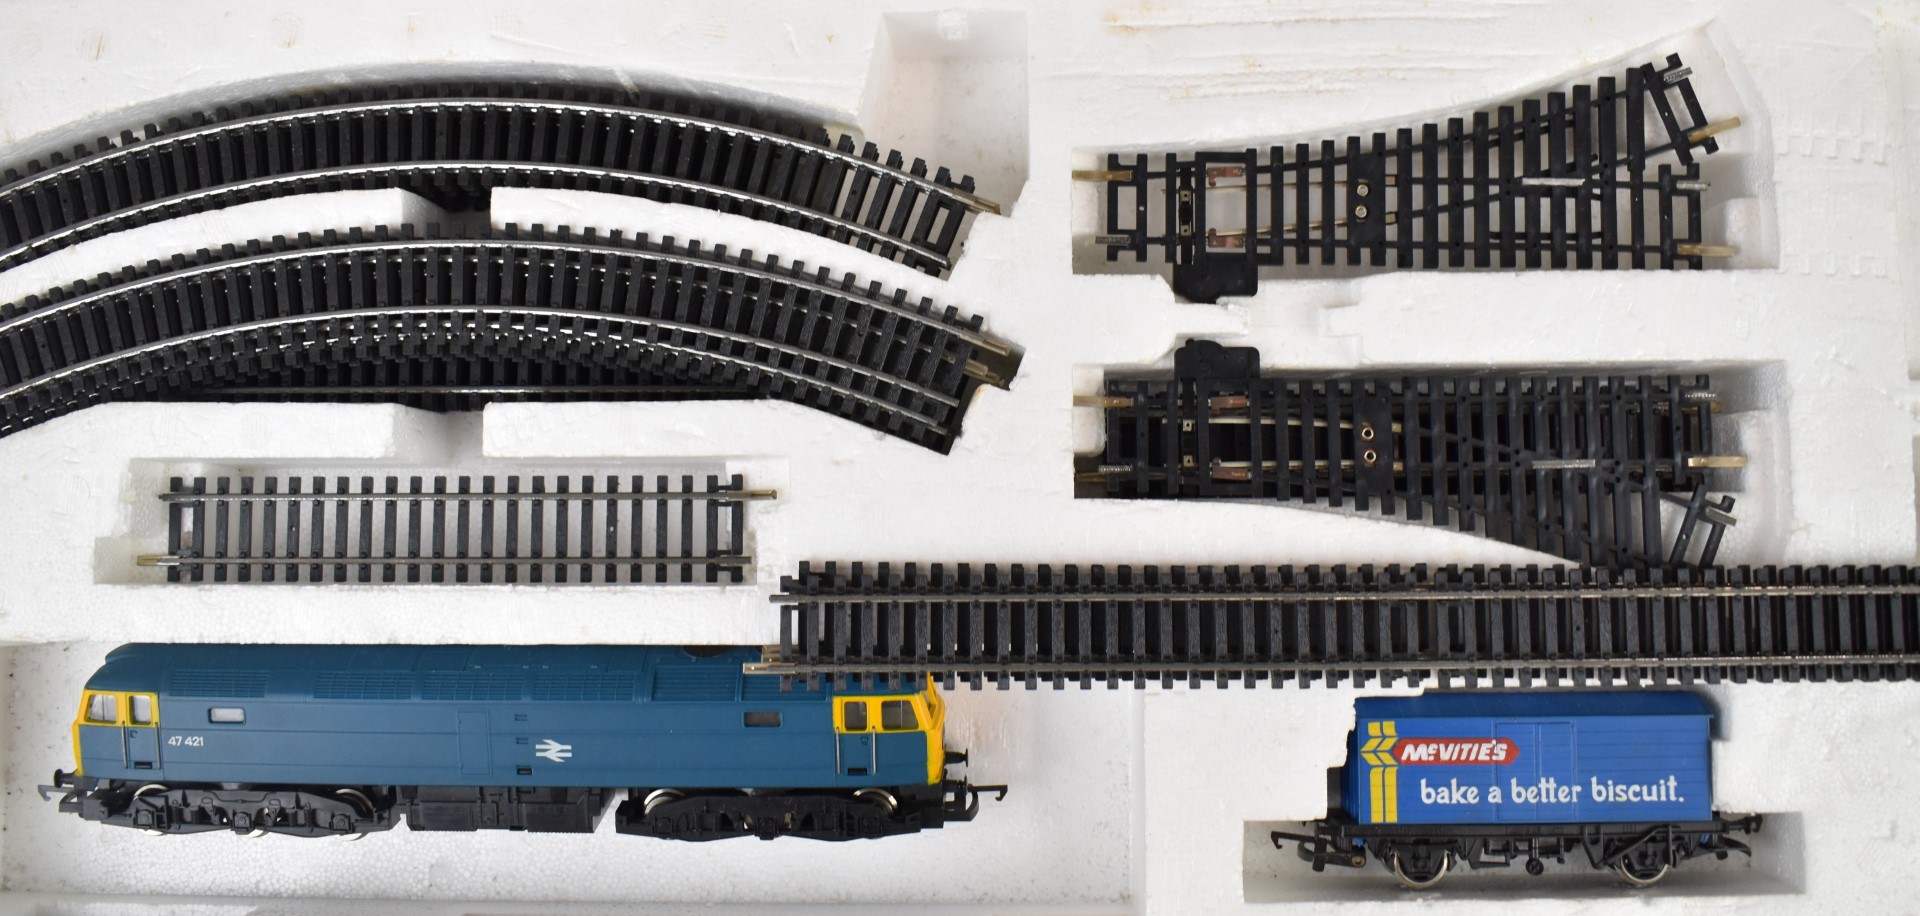 Hornby 00 gauge model railway BR Express Freight train set, R.693, in original box - Image 6 of 7